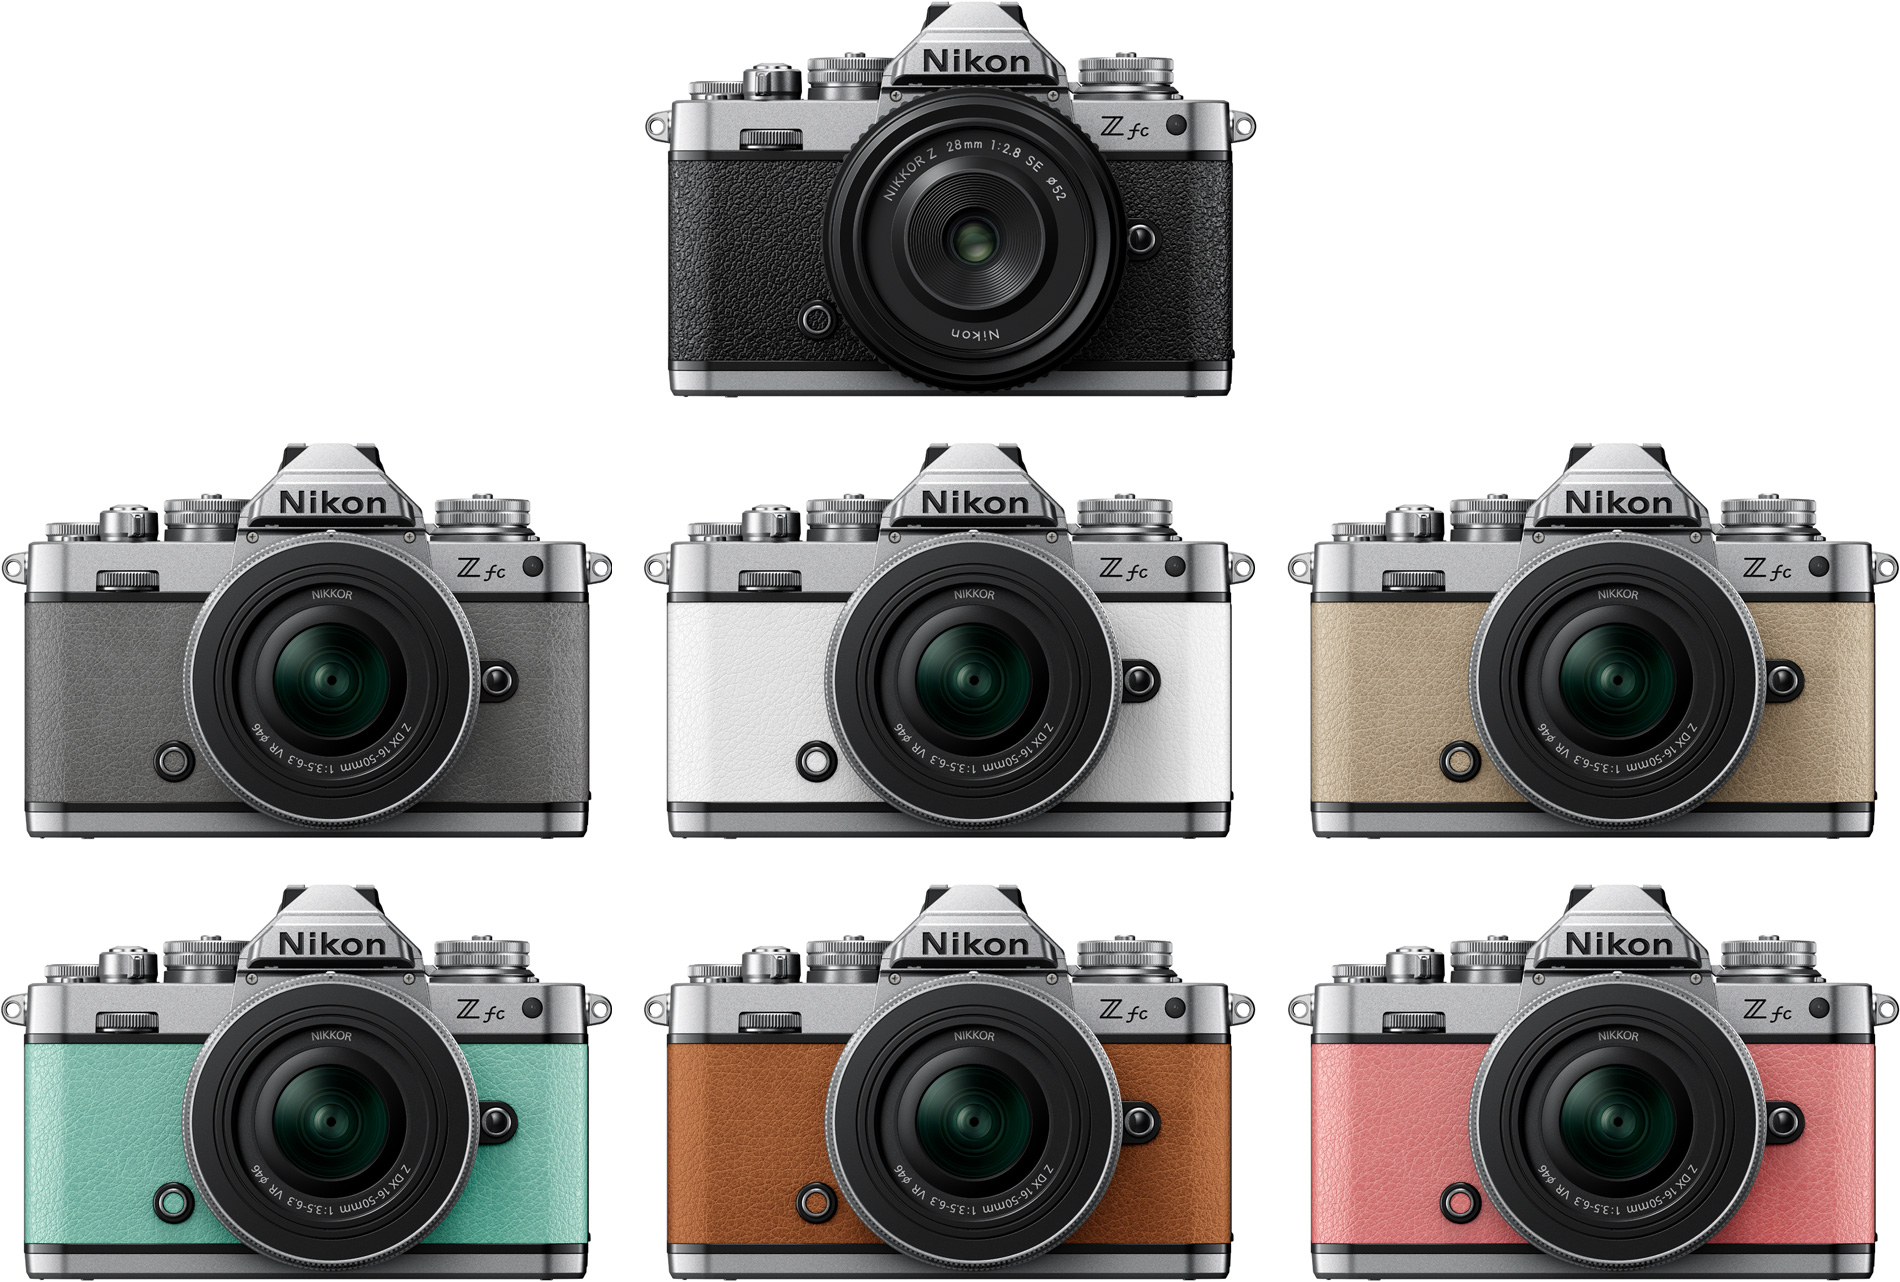 Nikon Z fc and "Premium Exterior", customizable color options